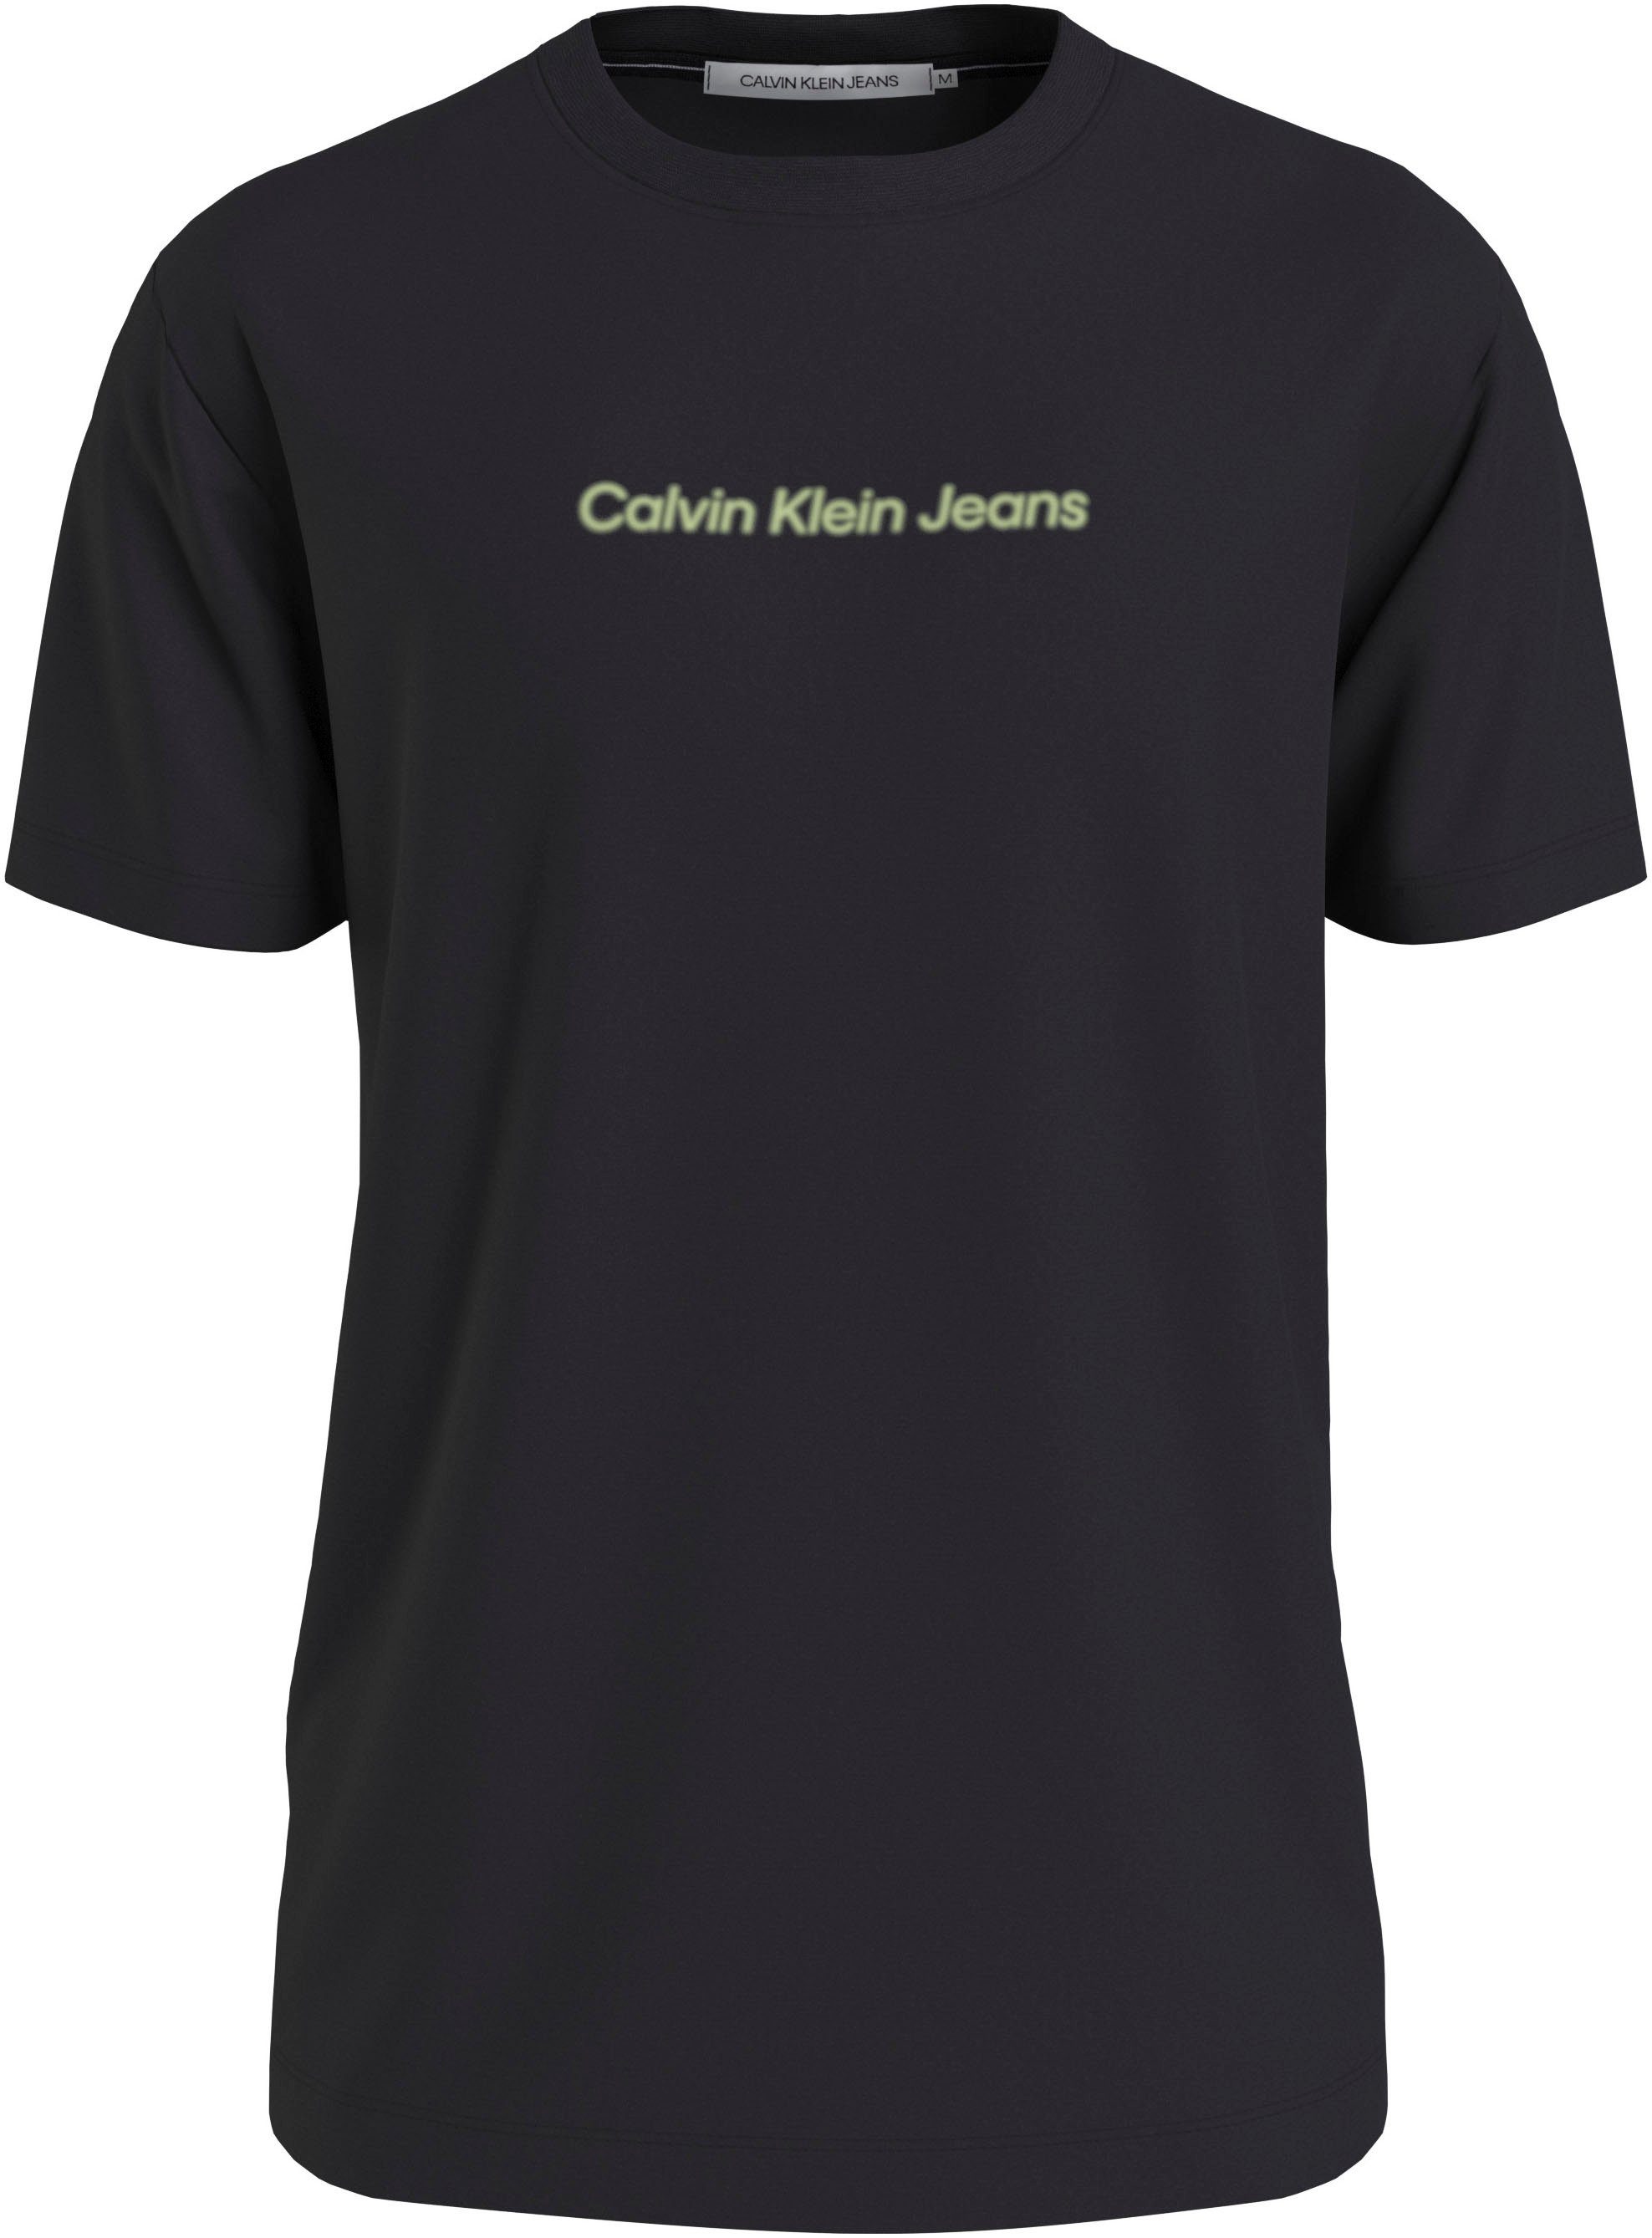 Jeans Calvin T-Shirt Klein CK TEE Black LOGO MIRRORED Ck